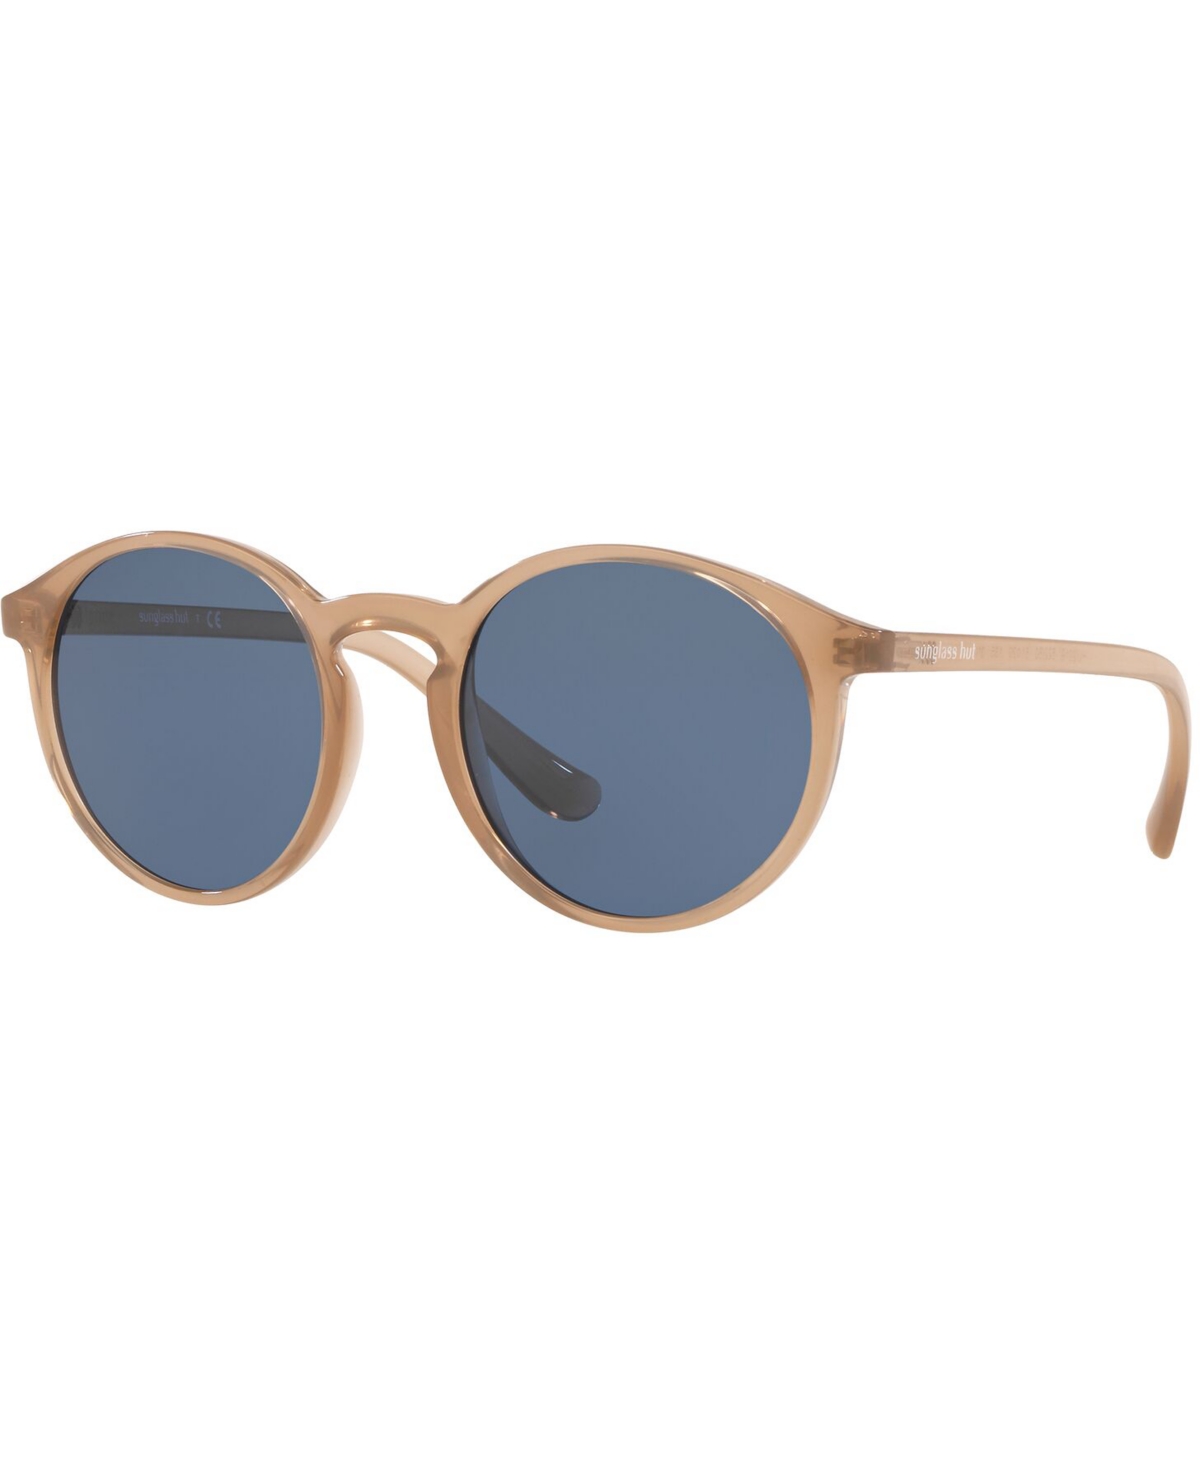 Sunglass Hut Collection Sunglasses, 0hu2019 In Opal Sand,blue